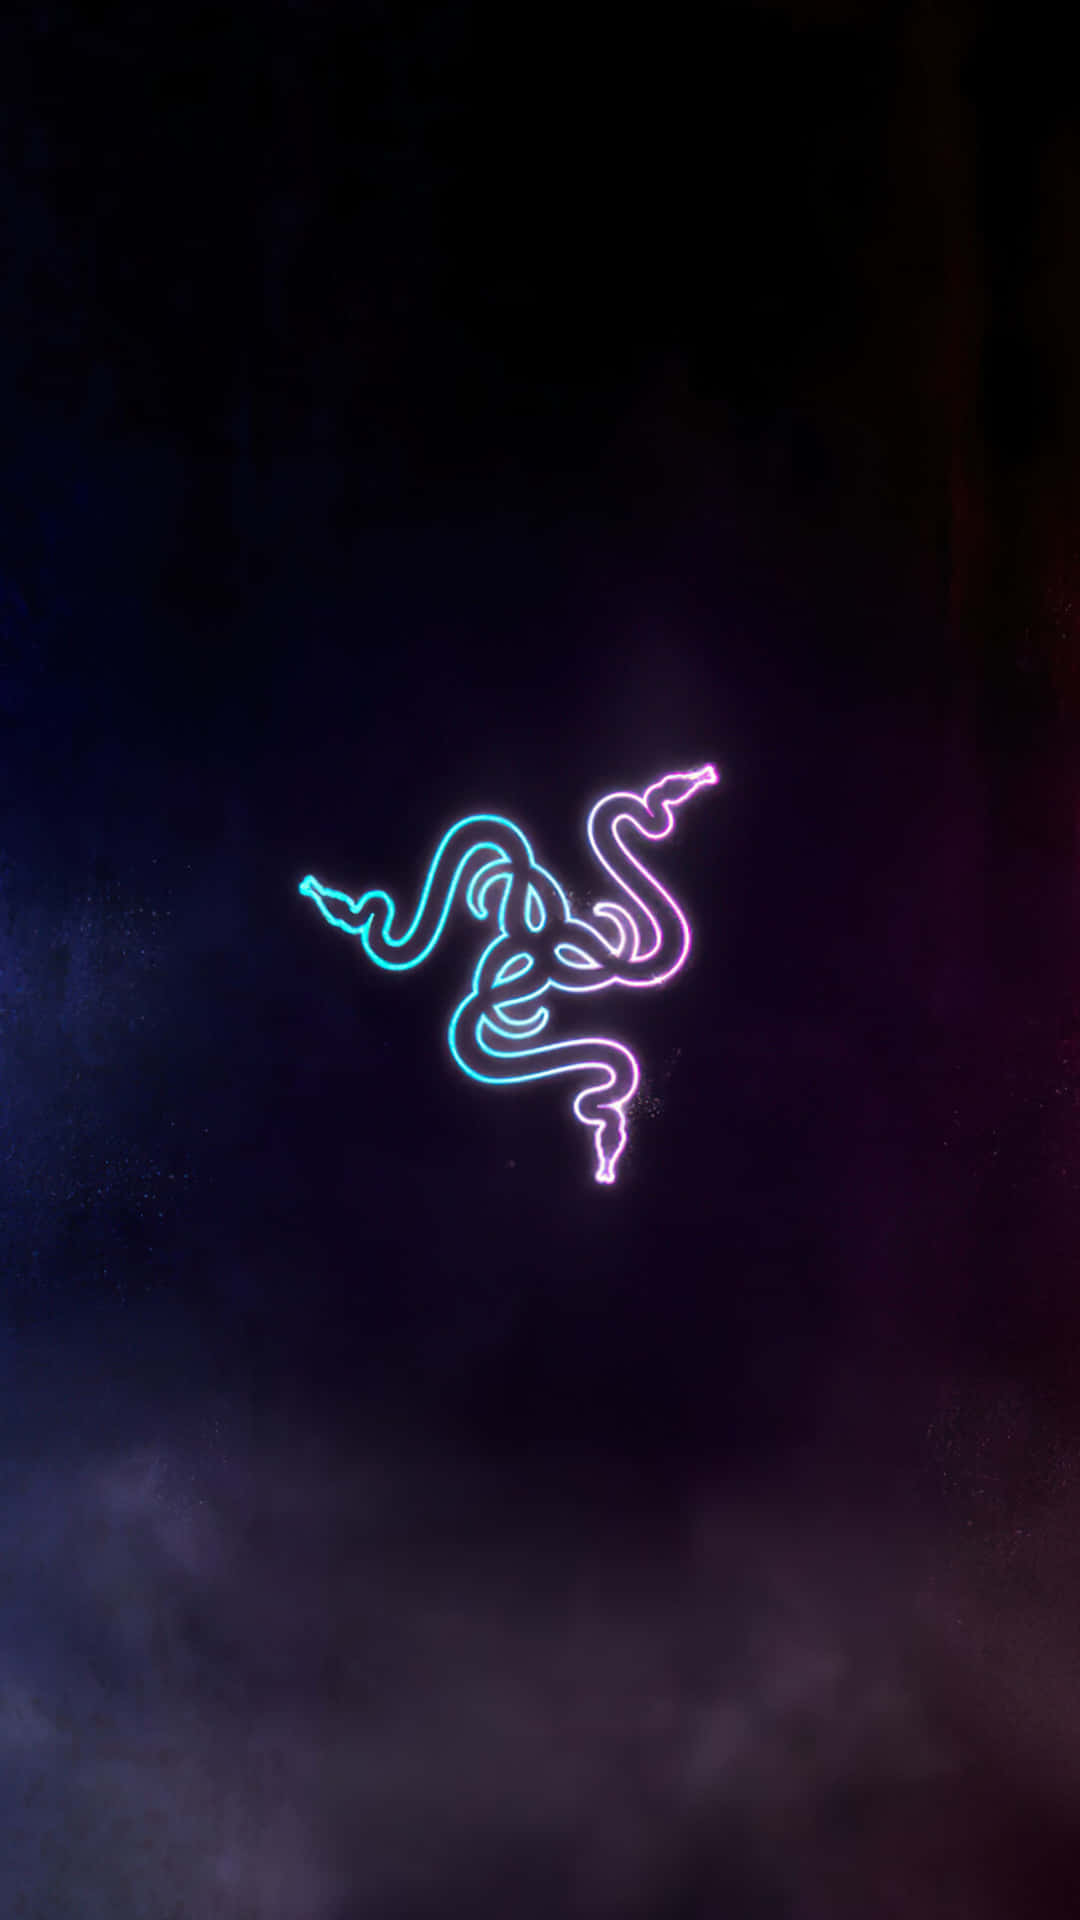 Abstract Neon Snake Logo Wallpaper